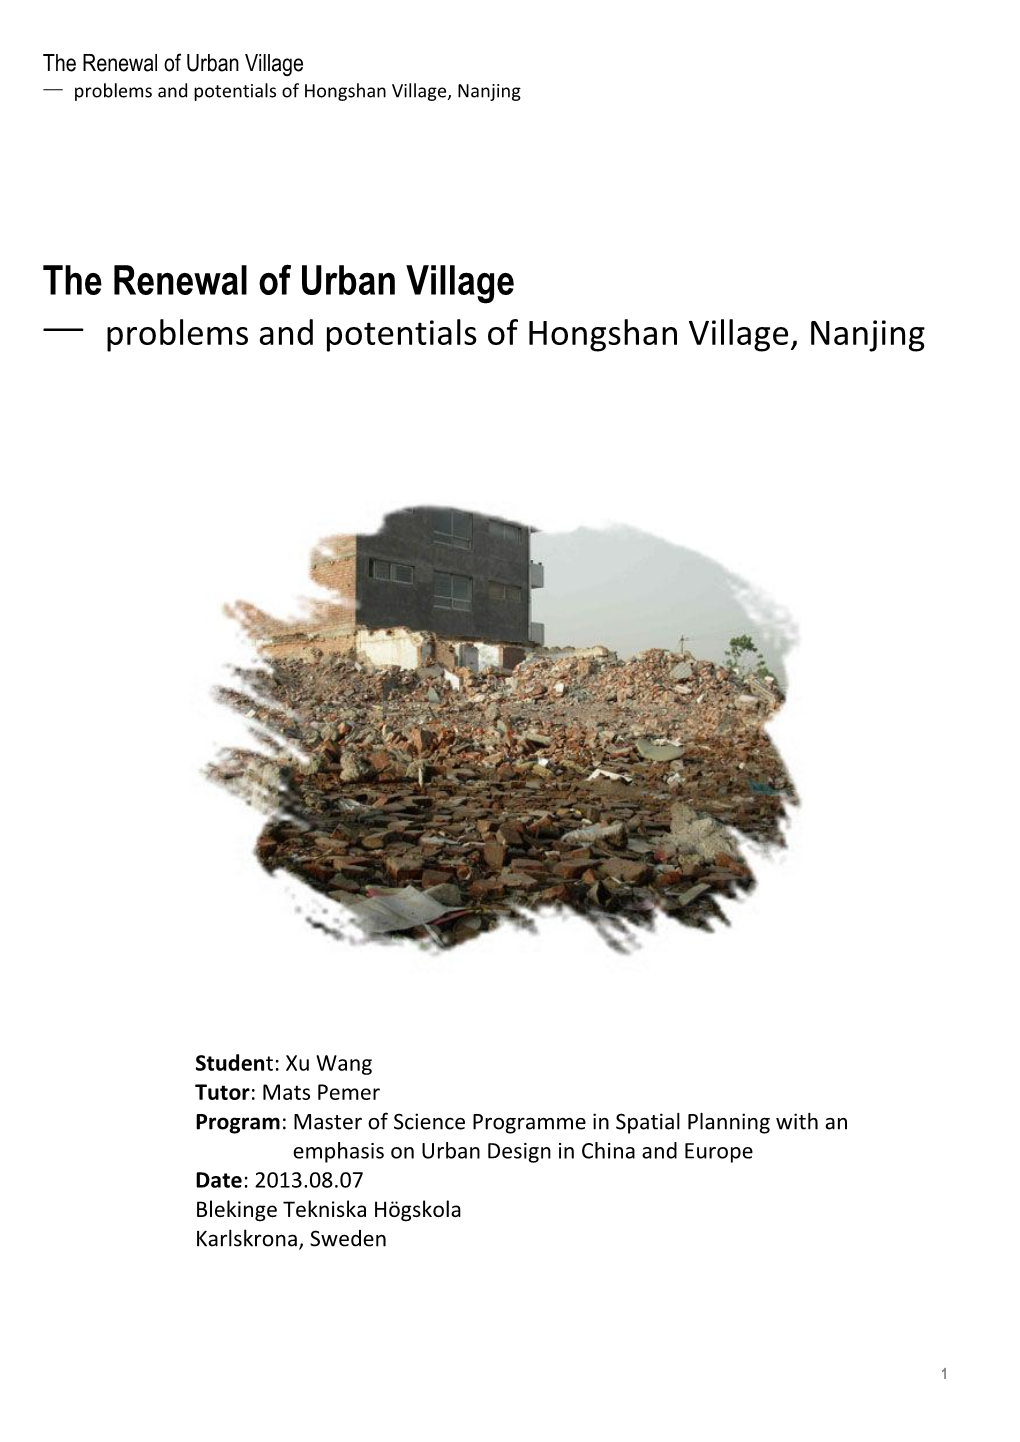 The Renewal of Urban Village — Problems and Potentials of Hongshan Village, Nanjing